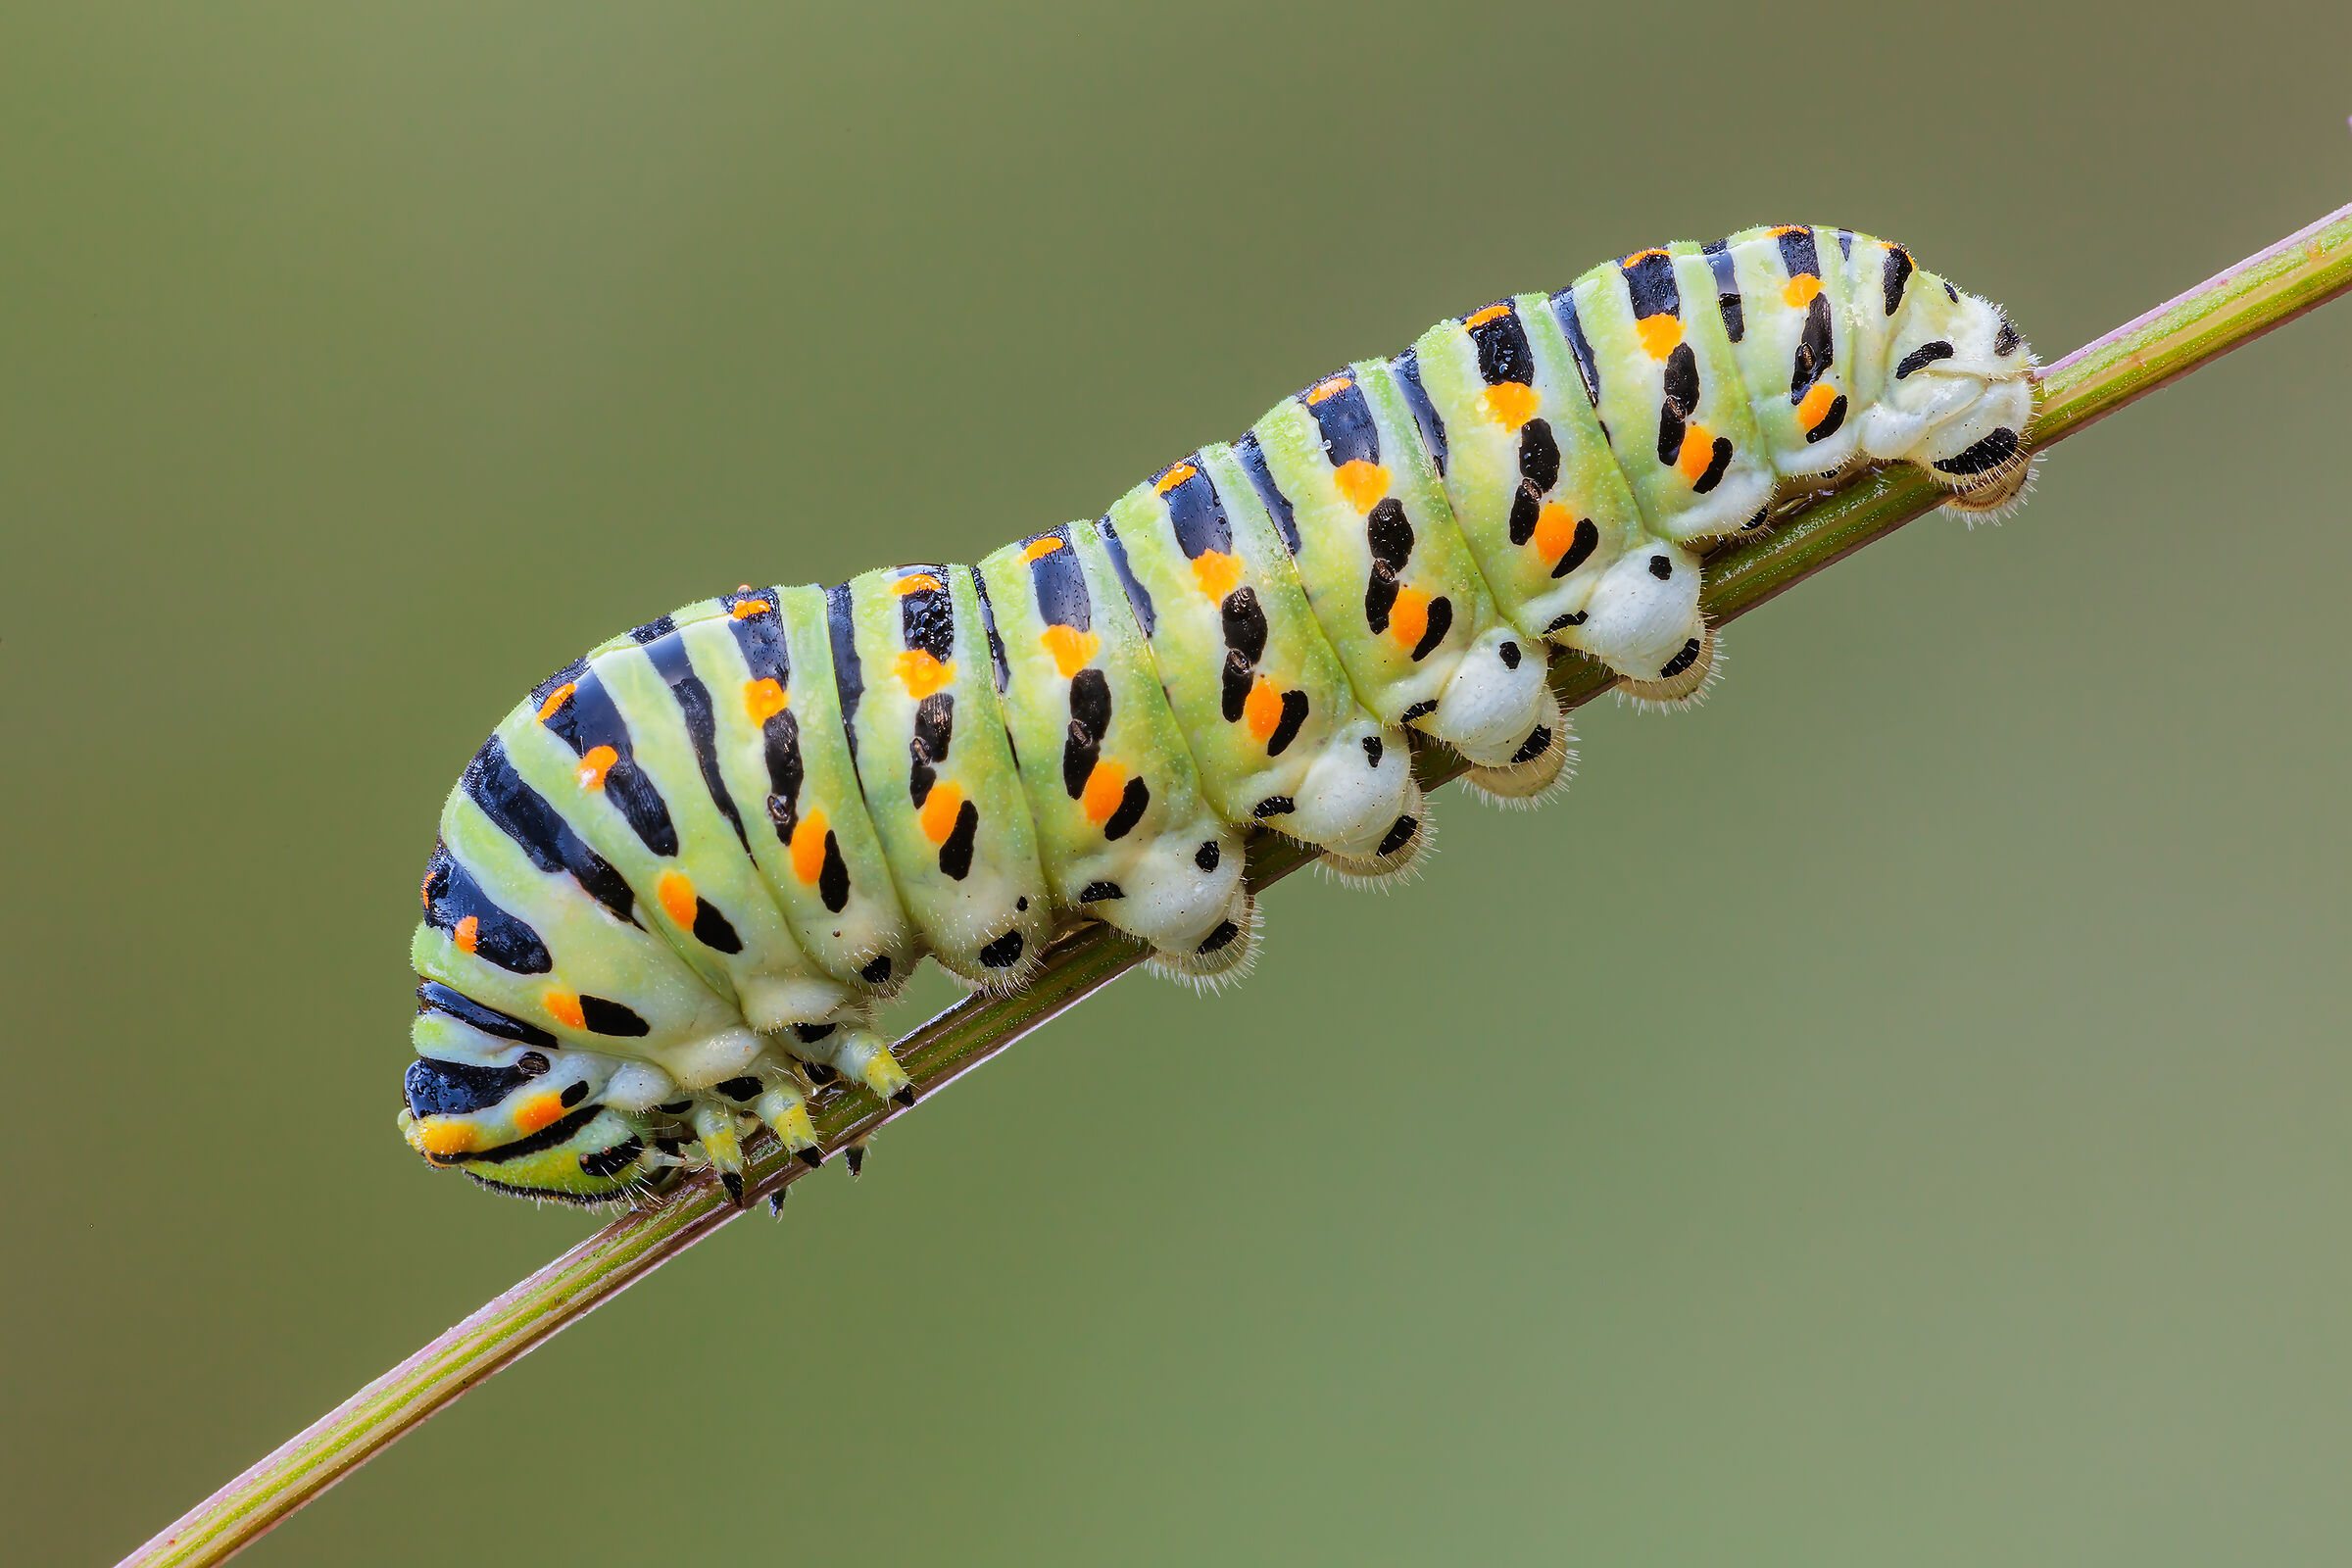 Macaone caterpillar...